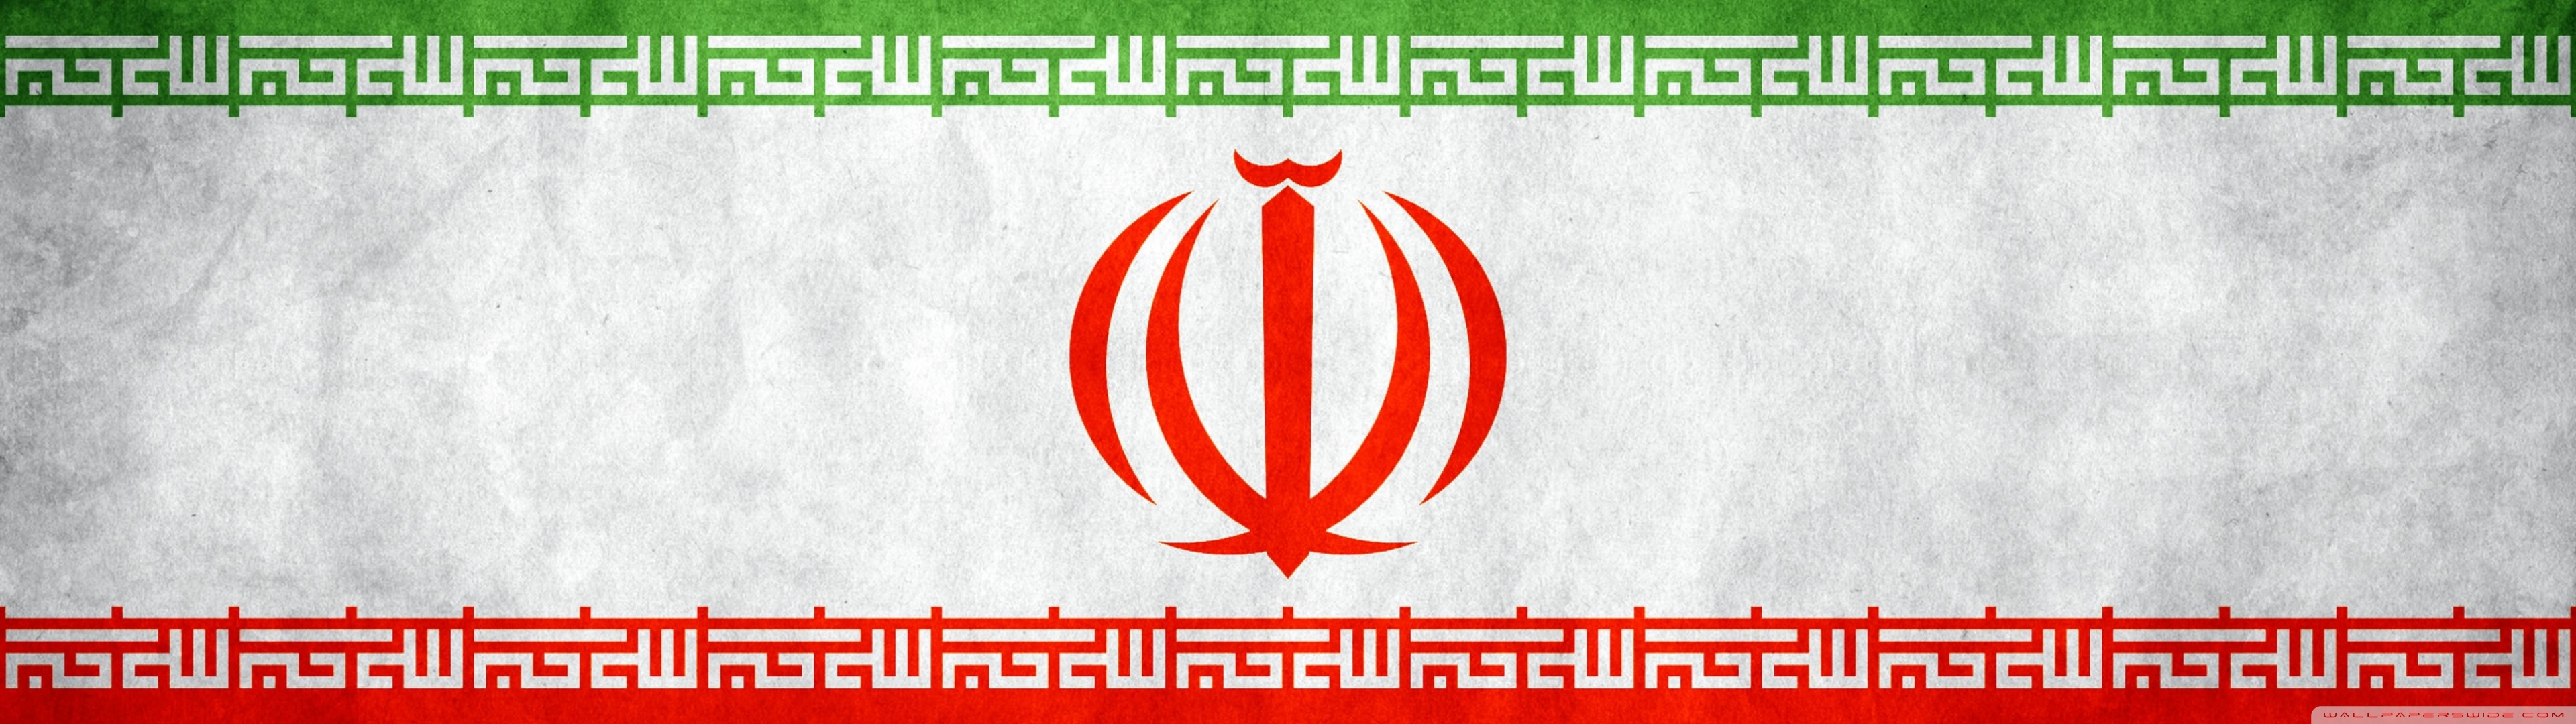 Flag Of Iran - 3840x1080 Wallpaper 